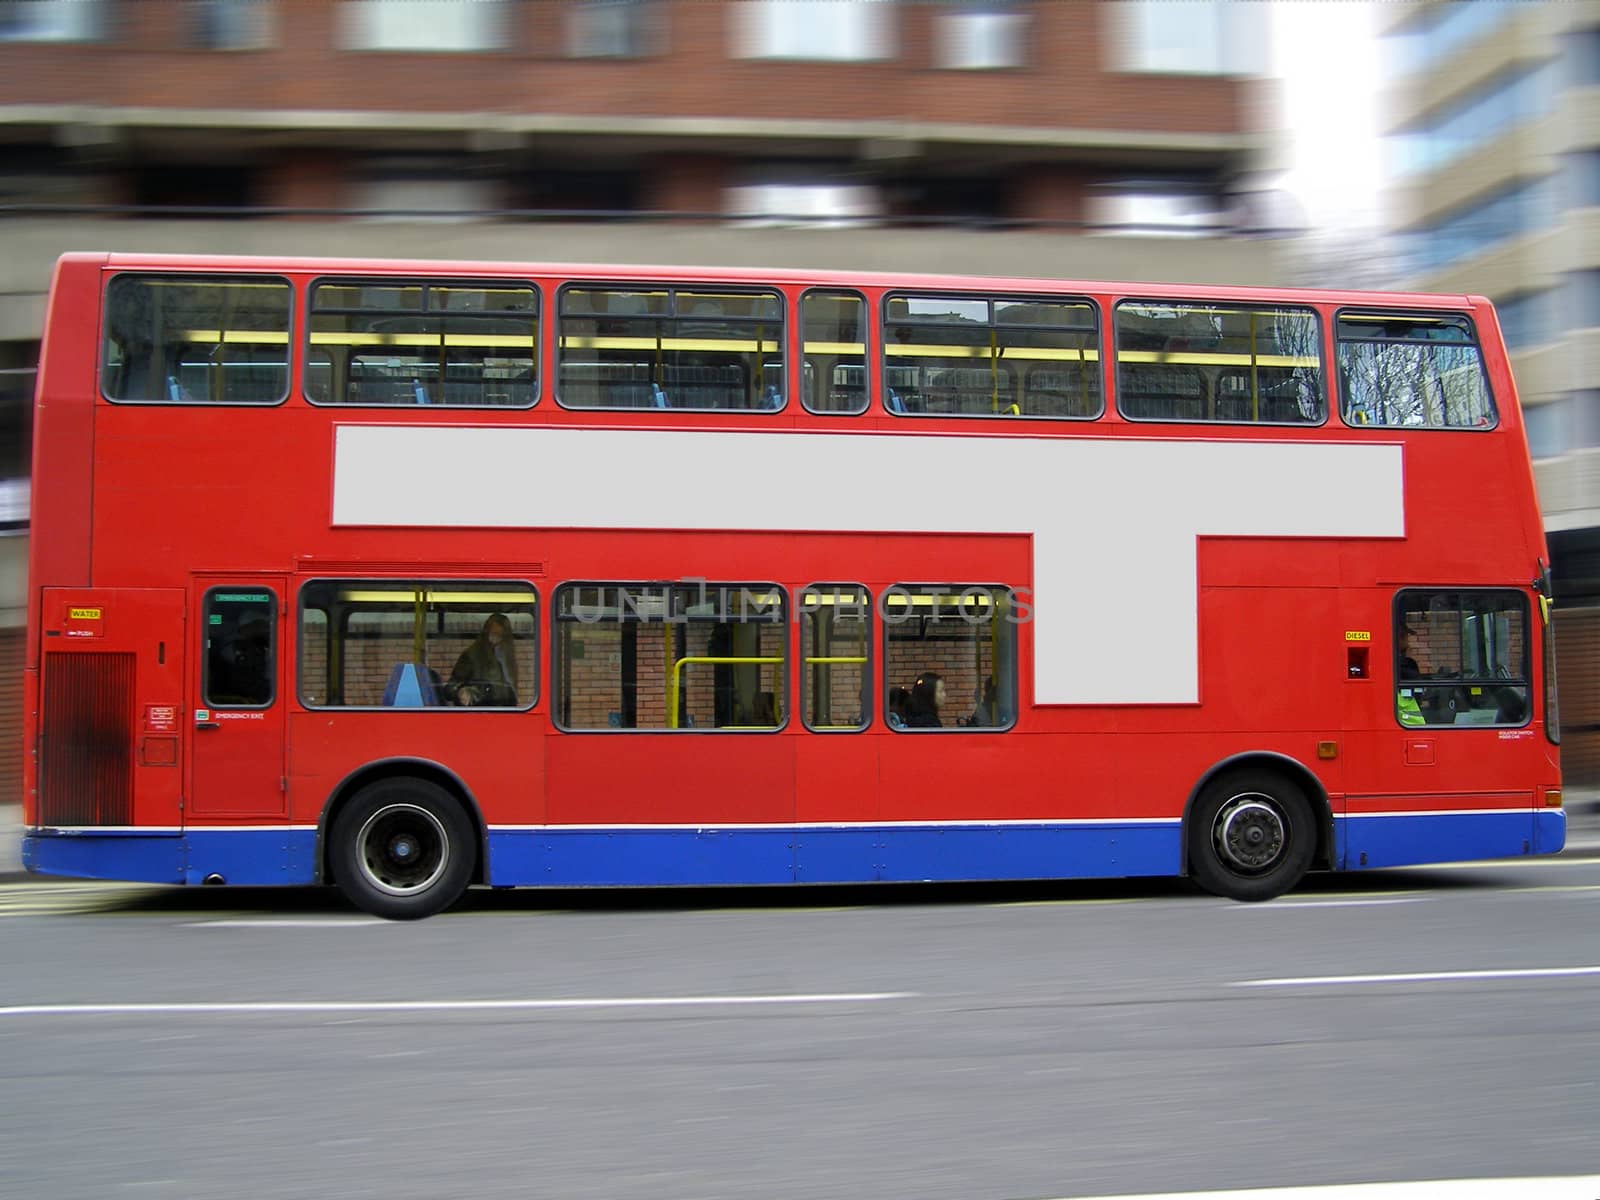 Double decker red London bus